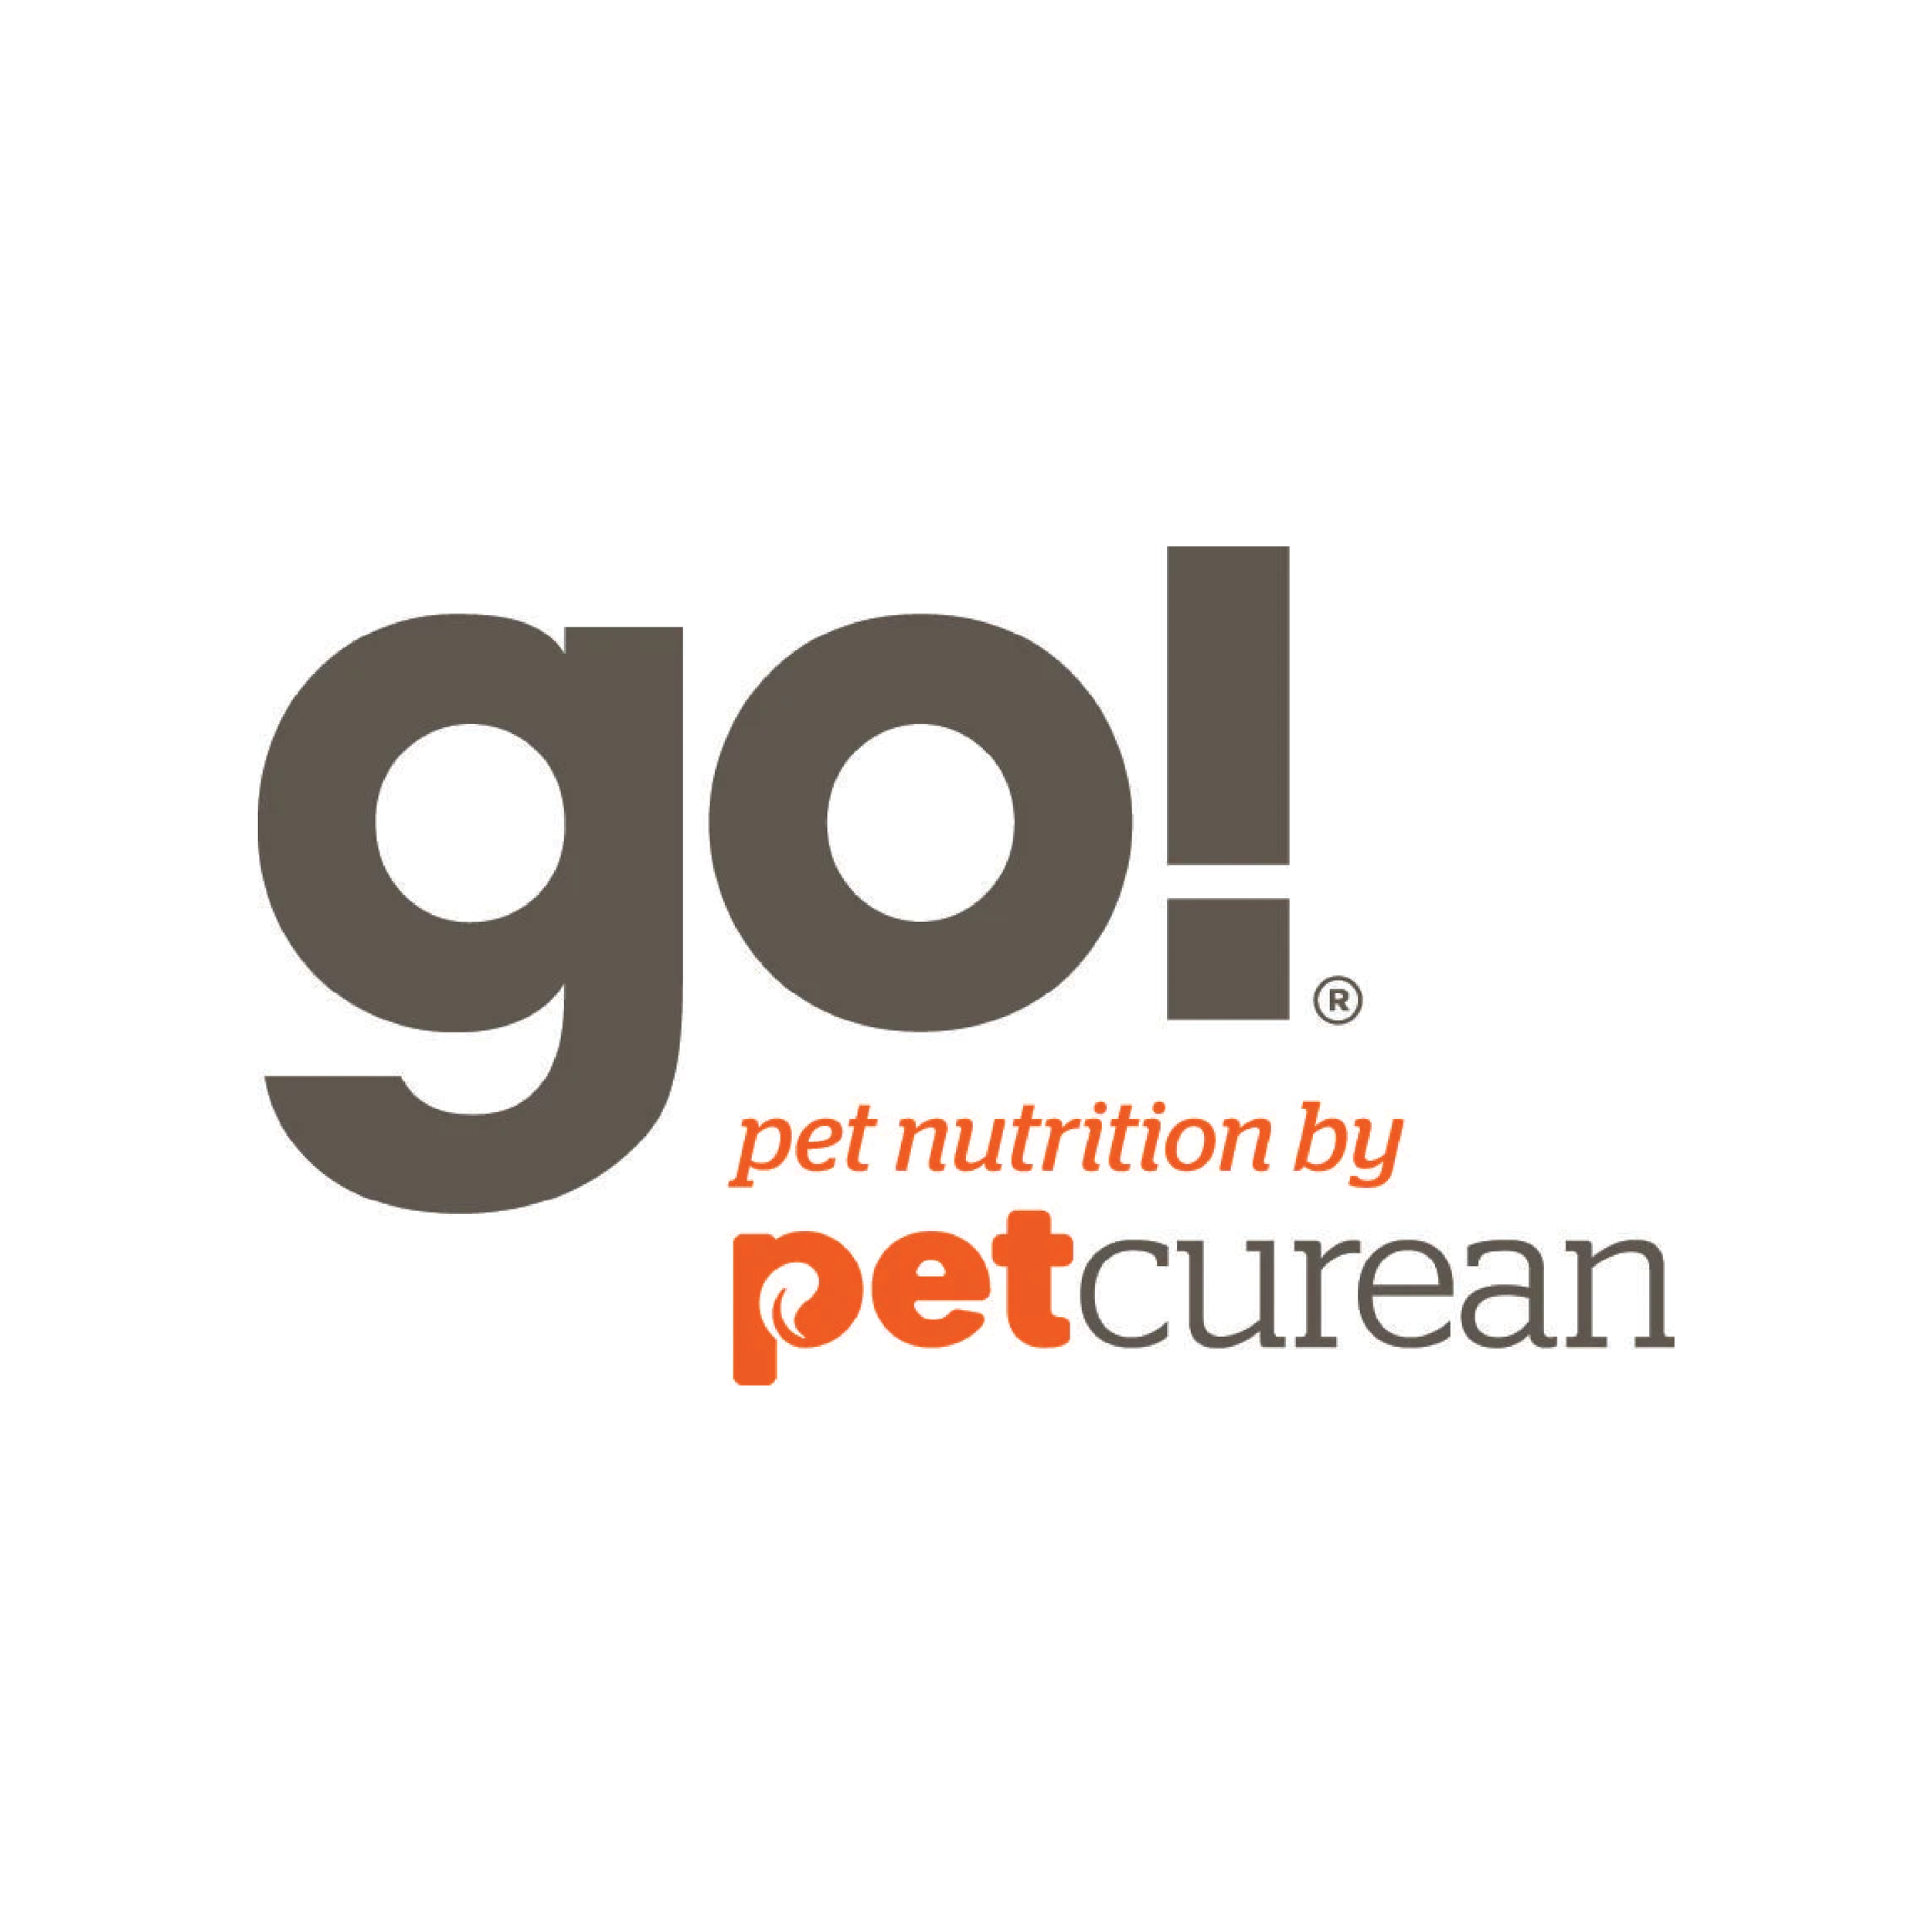 Pet Food Sensitivity Problem? GO! Pet Food Has Your Solution